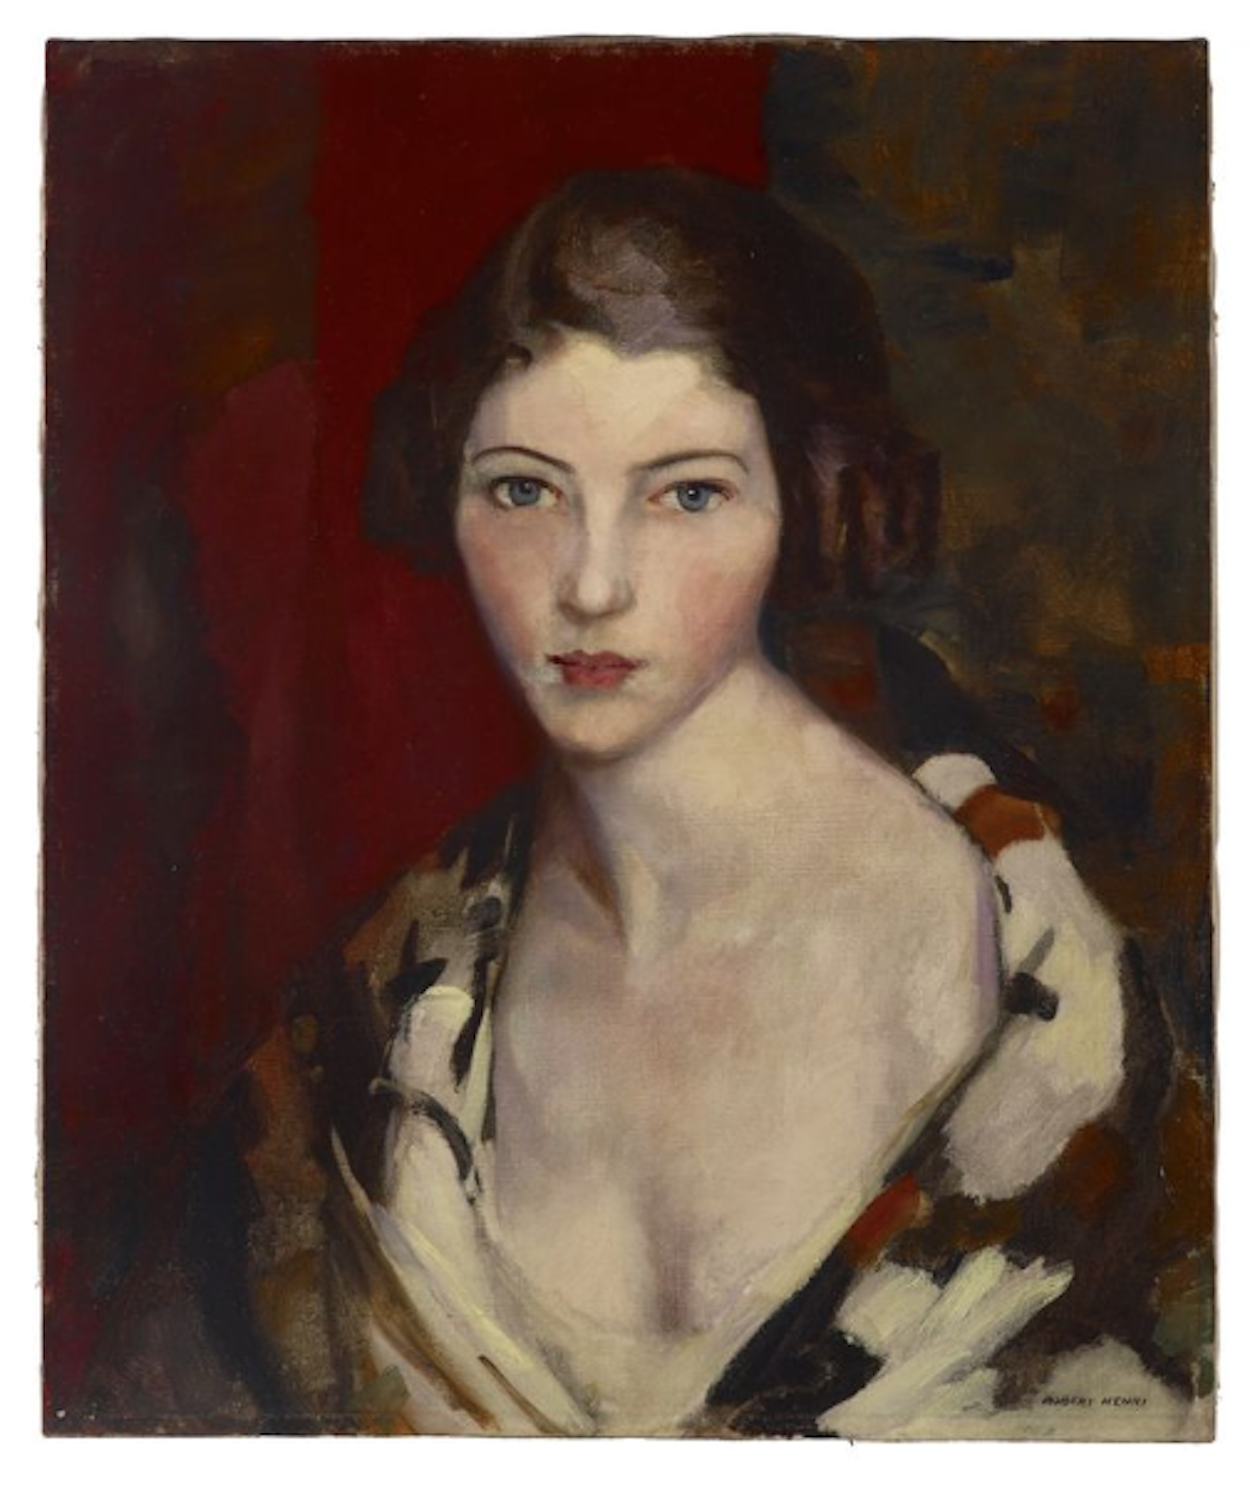 Helen by Robert Henri - 1917 Indianapolis Museum of Art